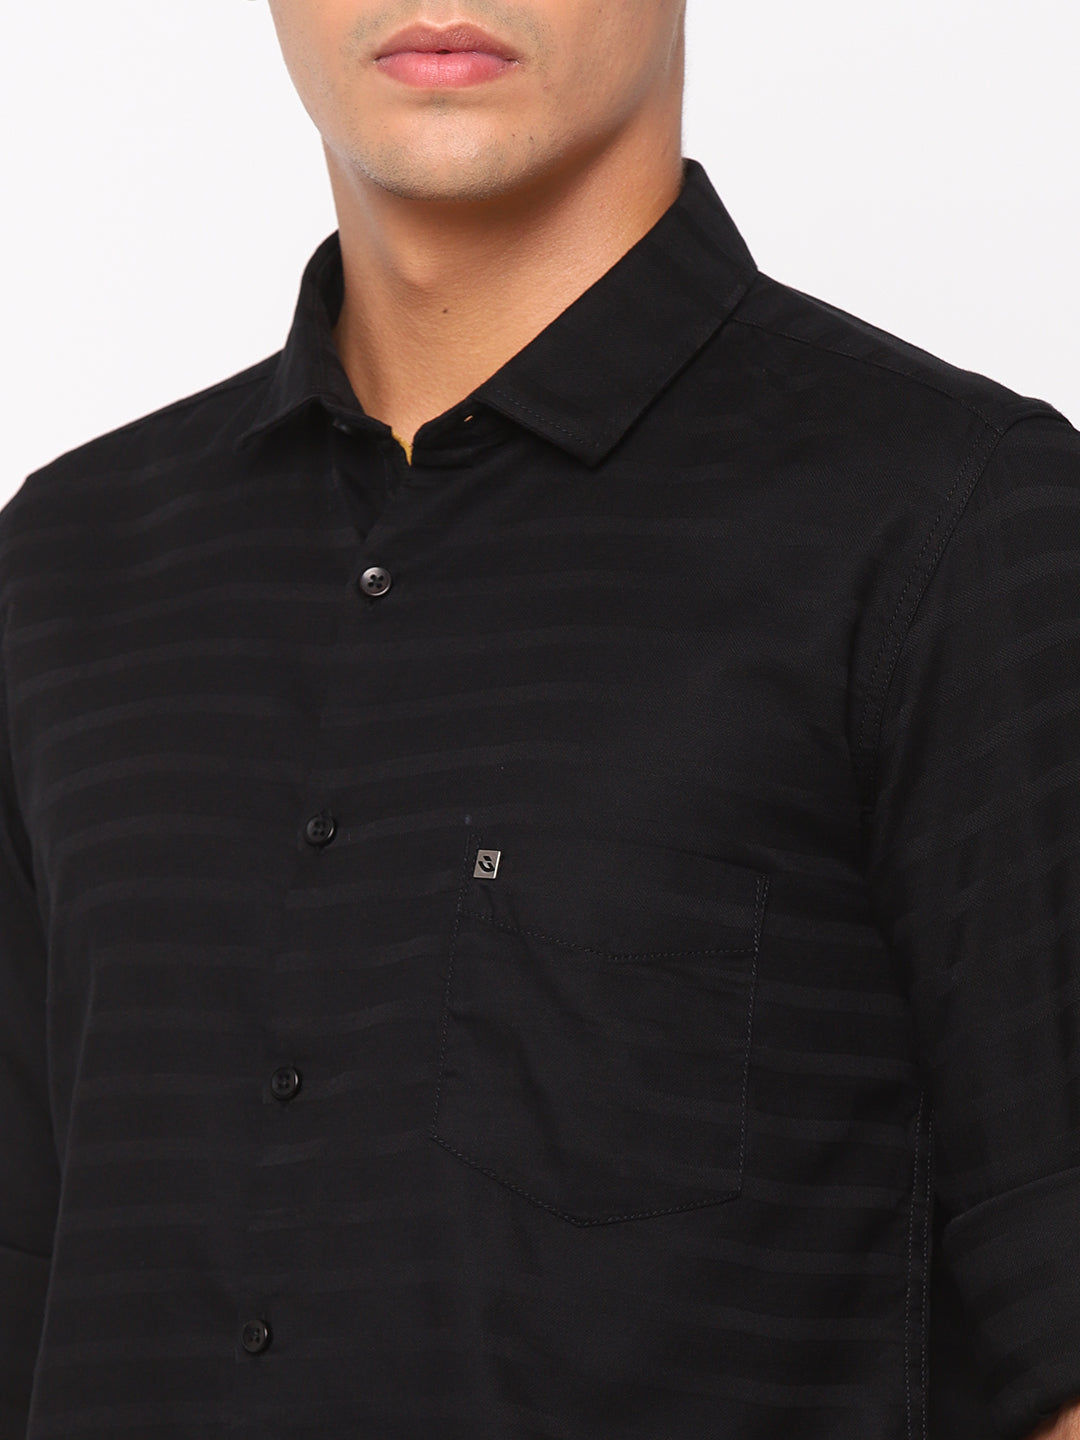 Slim Fit Black shirt with jacquard self pattern